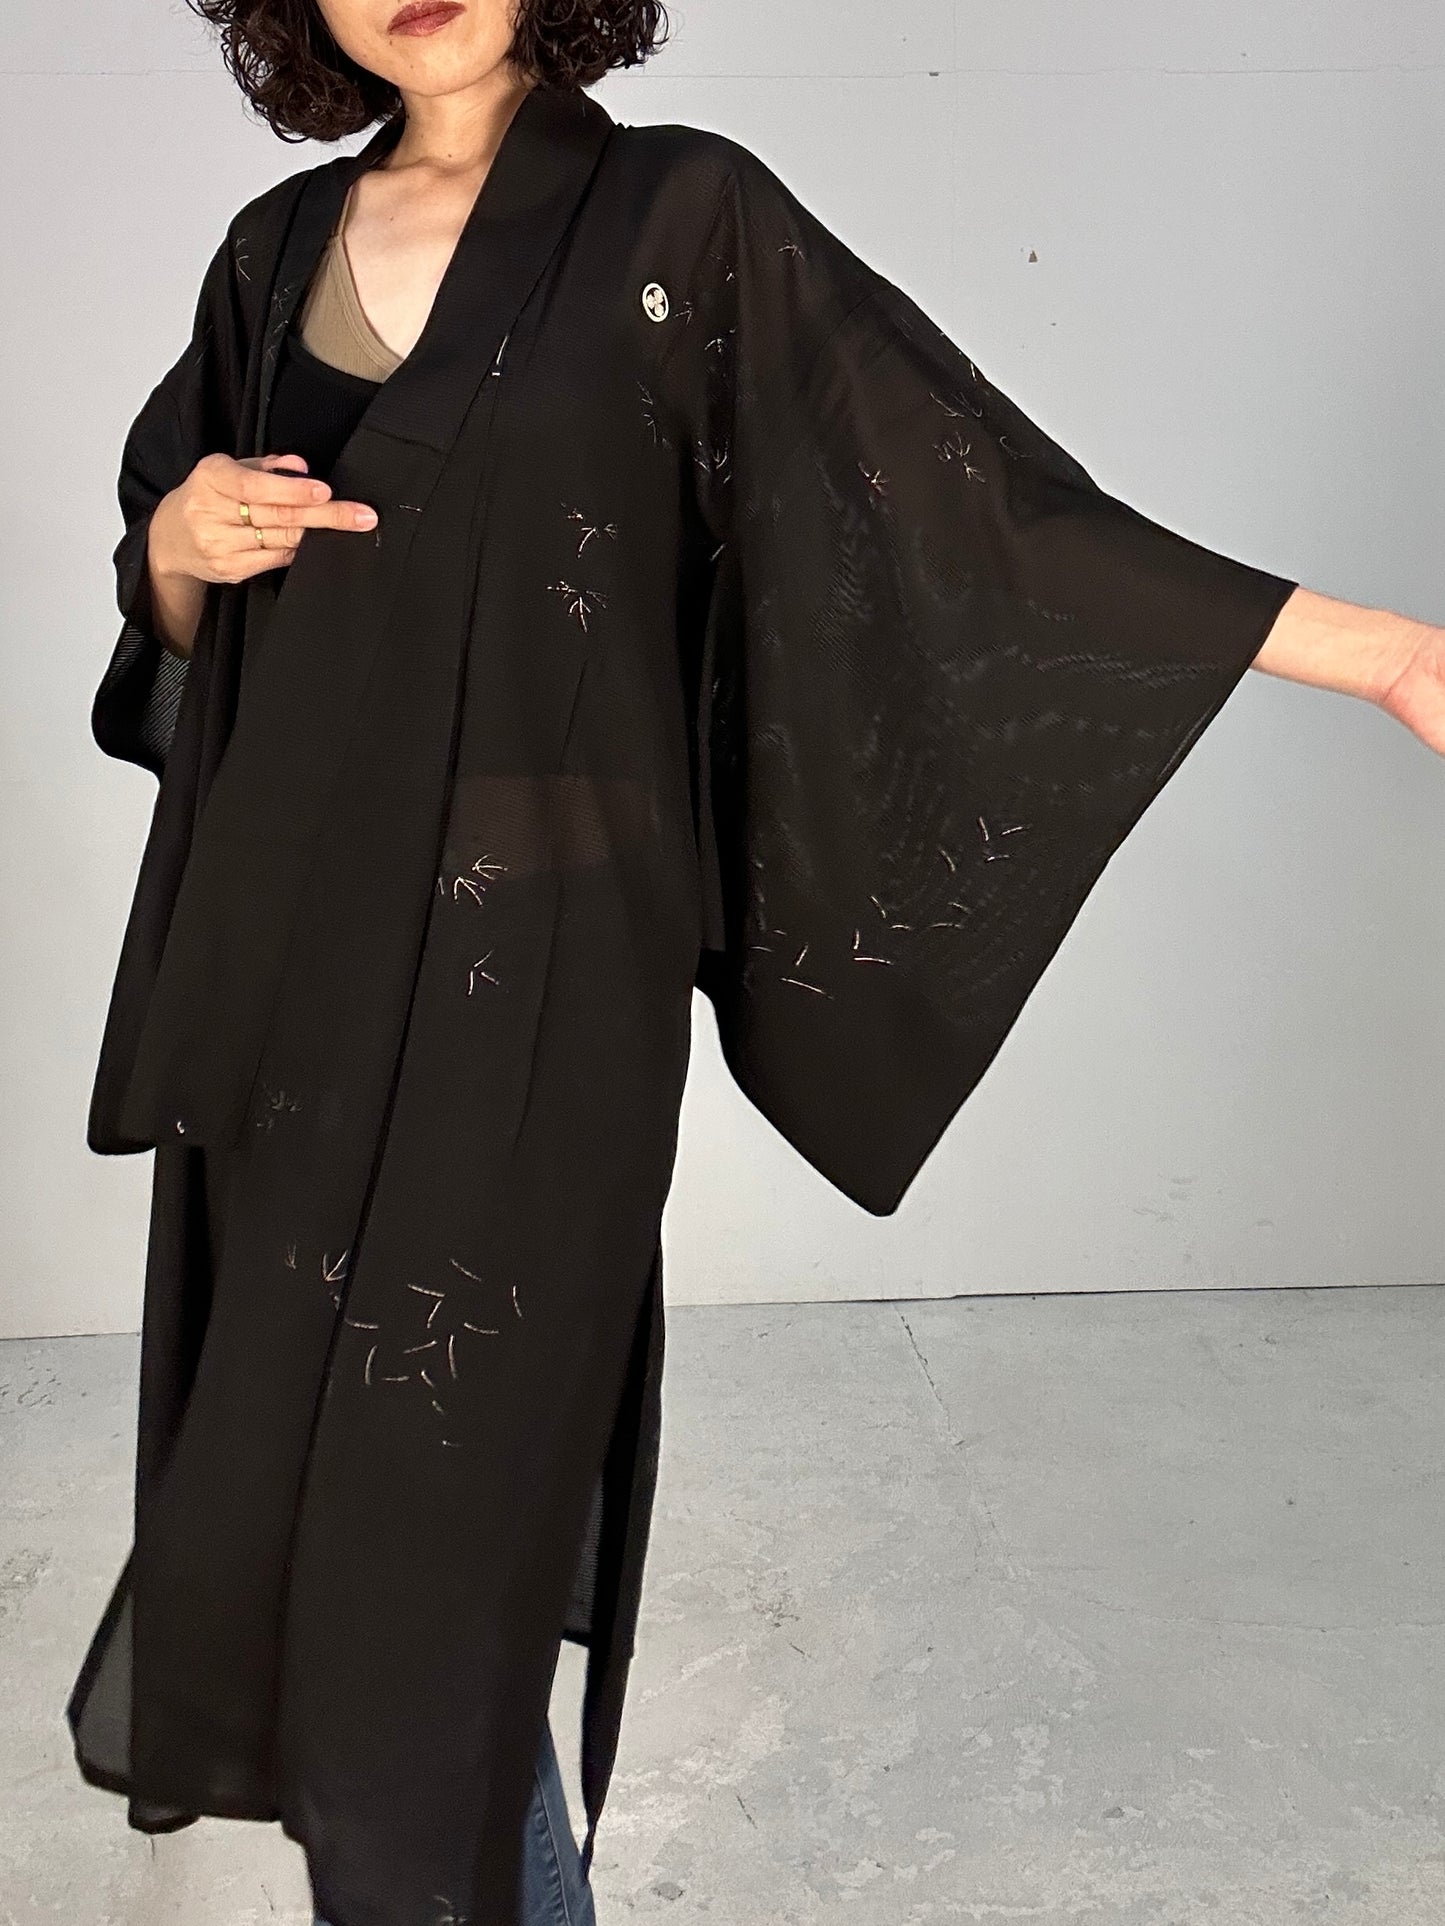 SHEER kimono dress gown and string belt upcycled from Japanese kimono "kin ashiato"